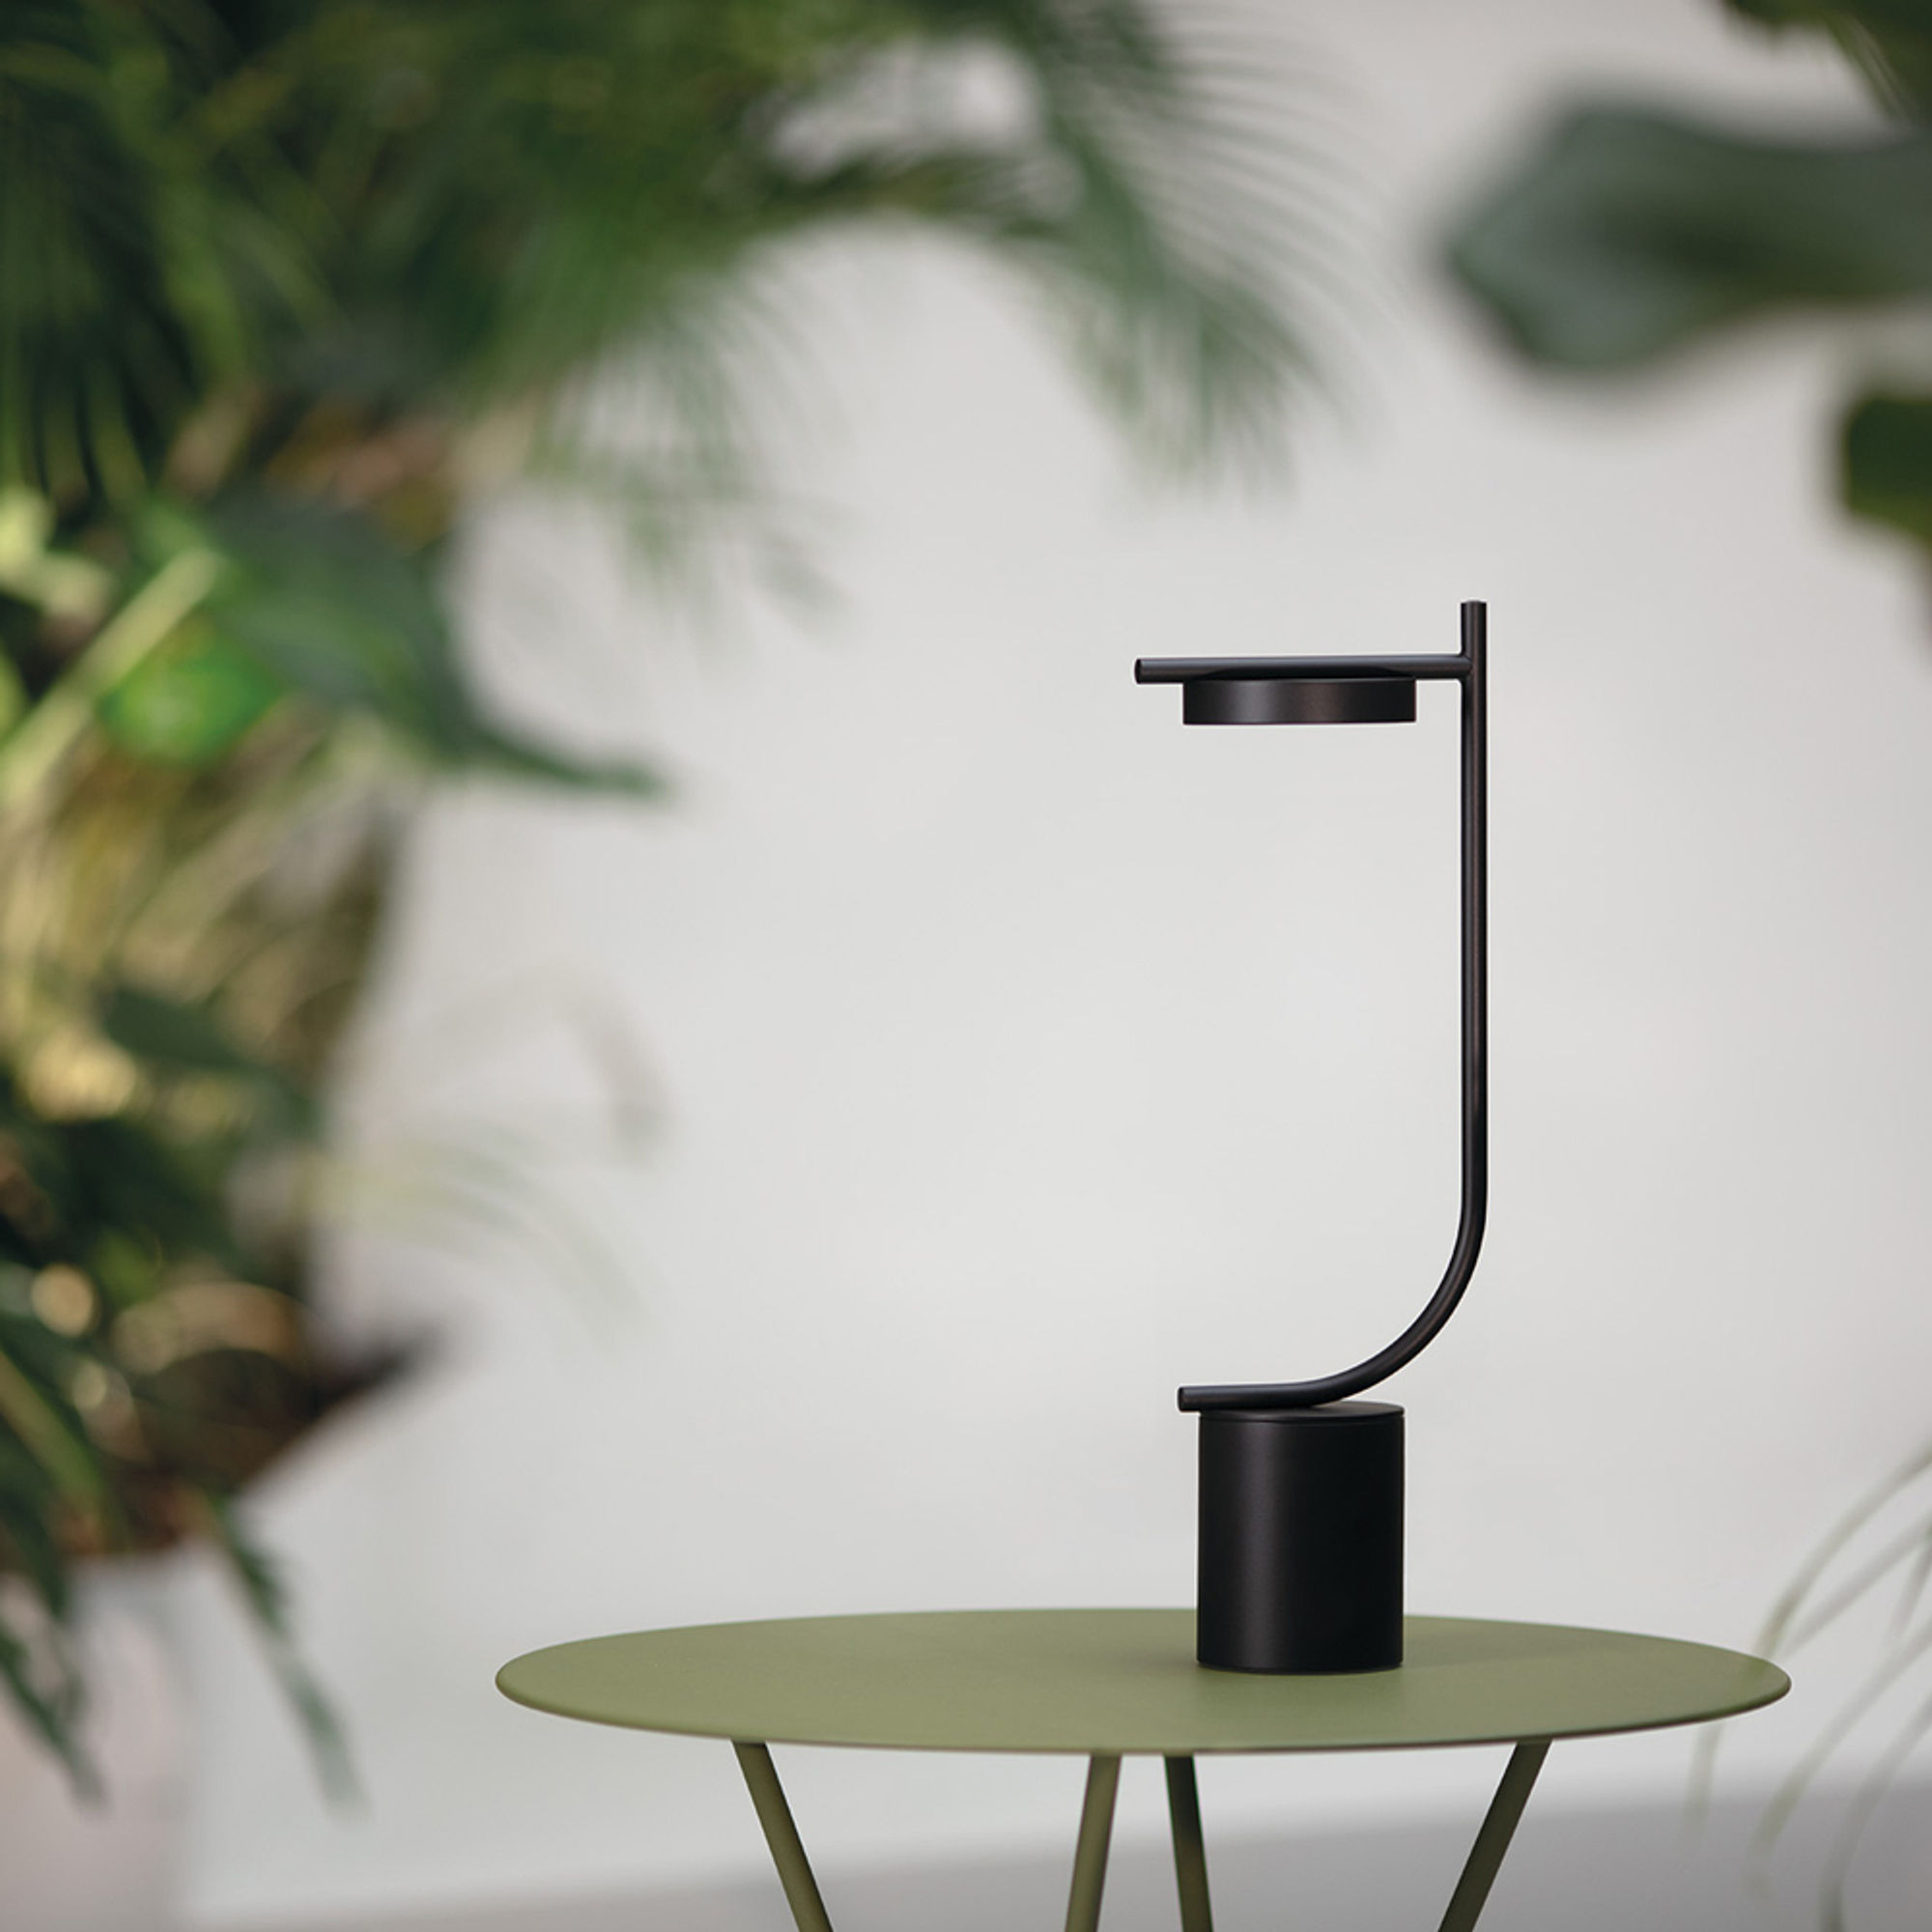 The Igram J Portable Table Lamp by Grupa 4